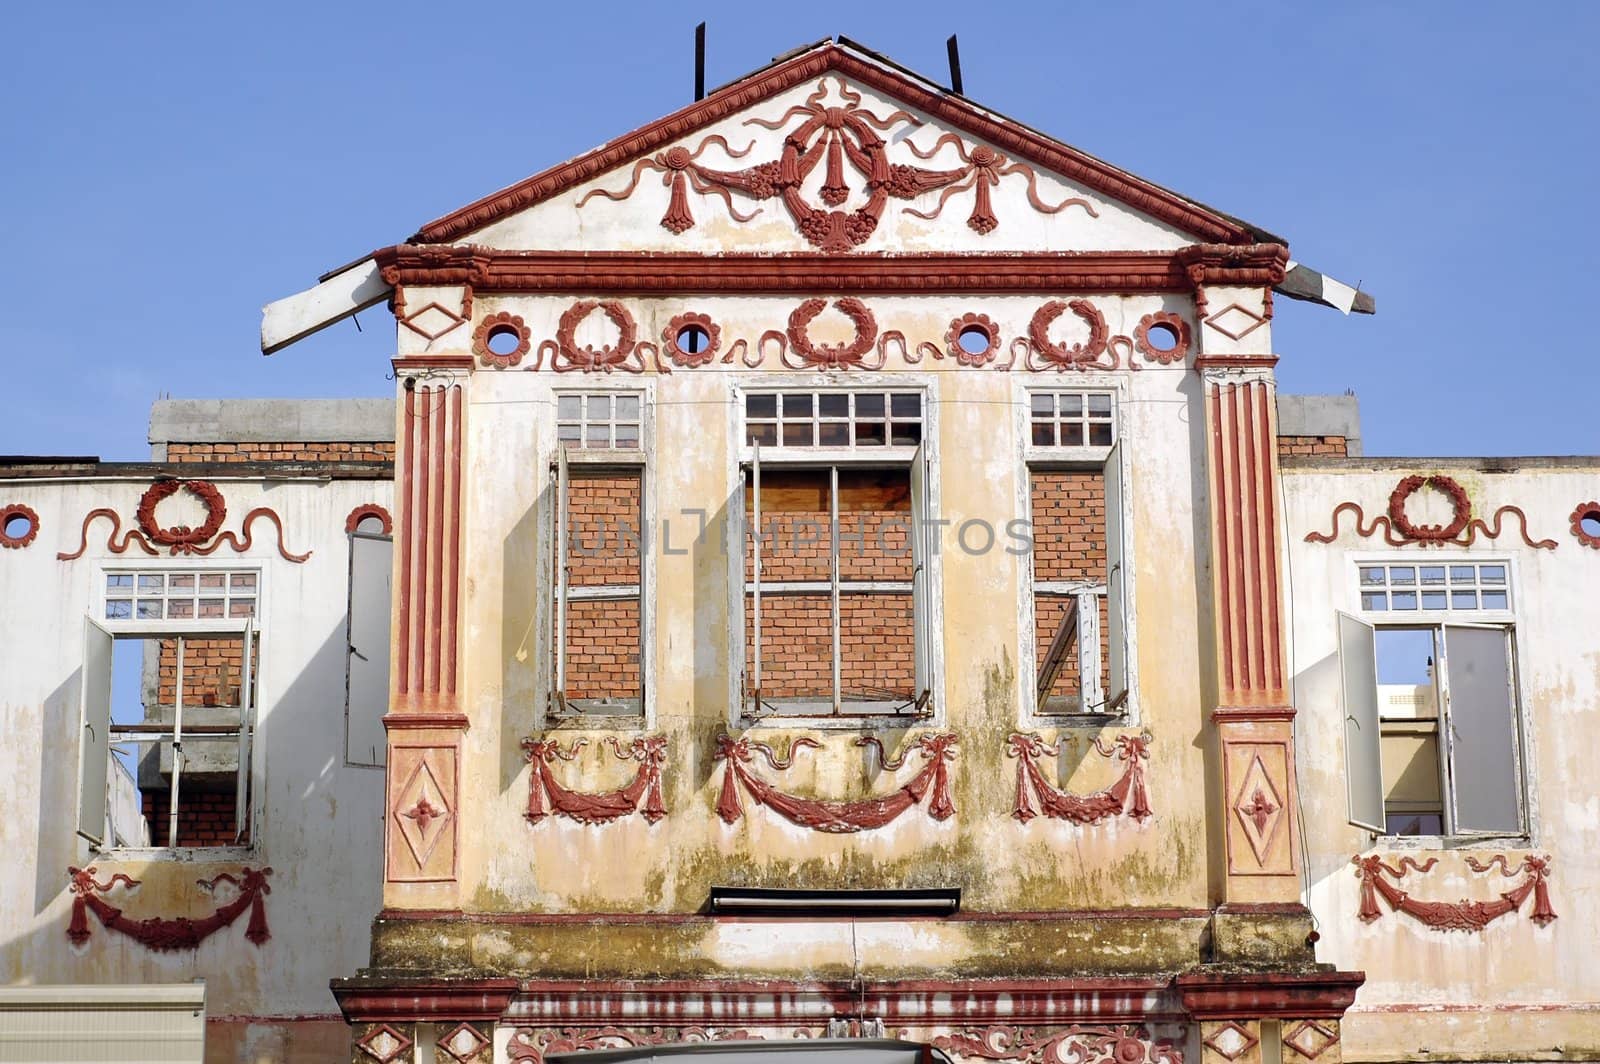 A deserted demolished old colonial heritage building